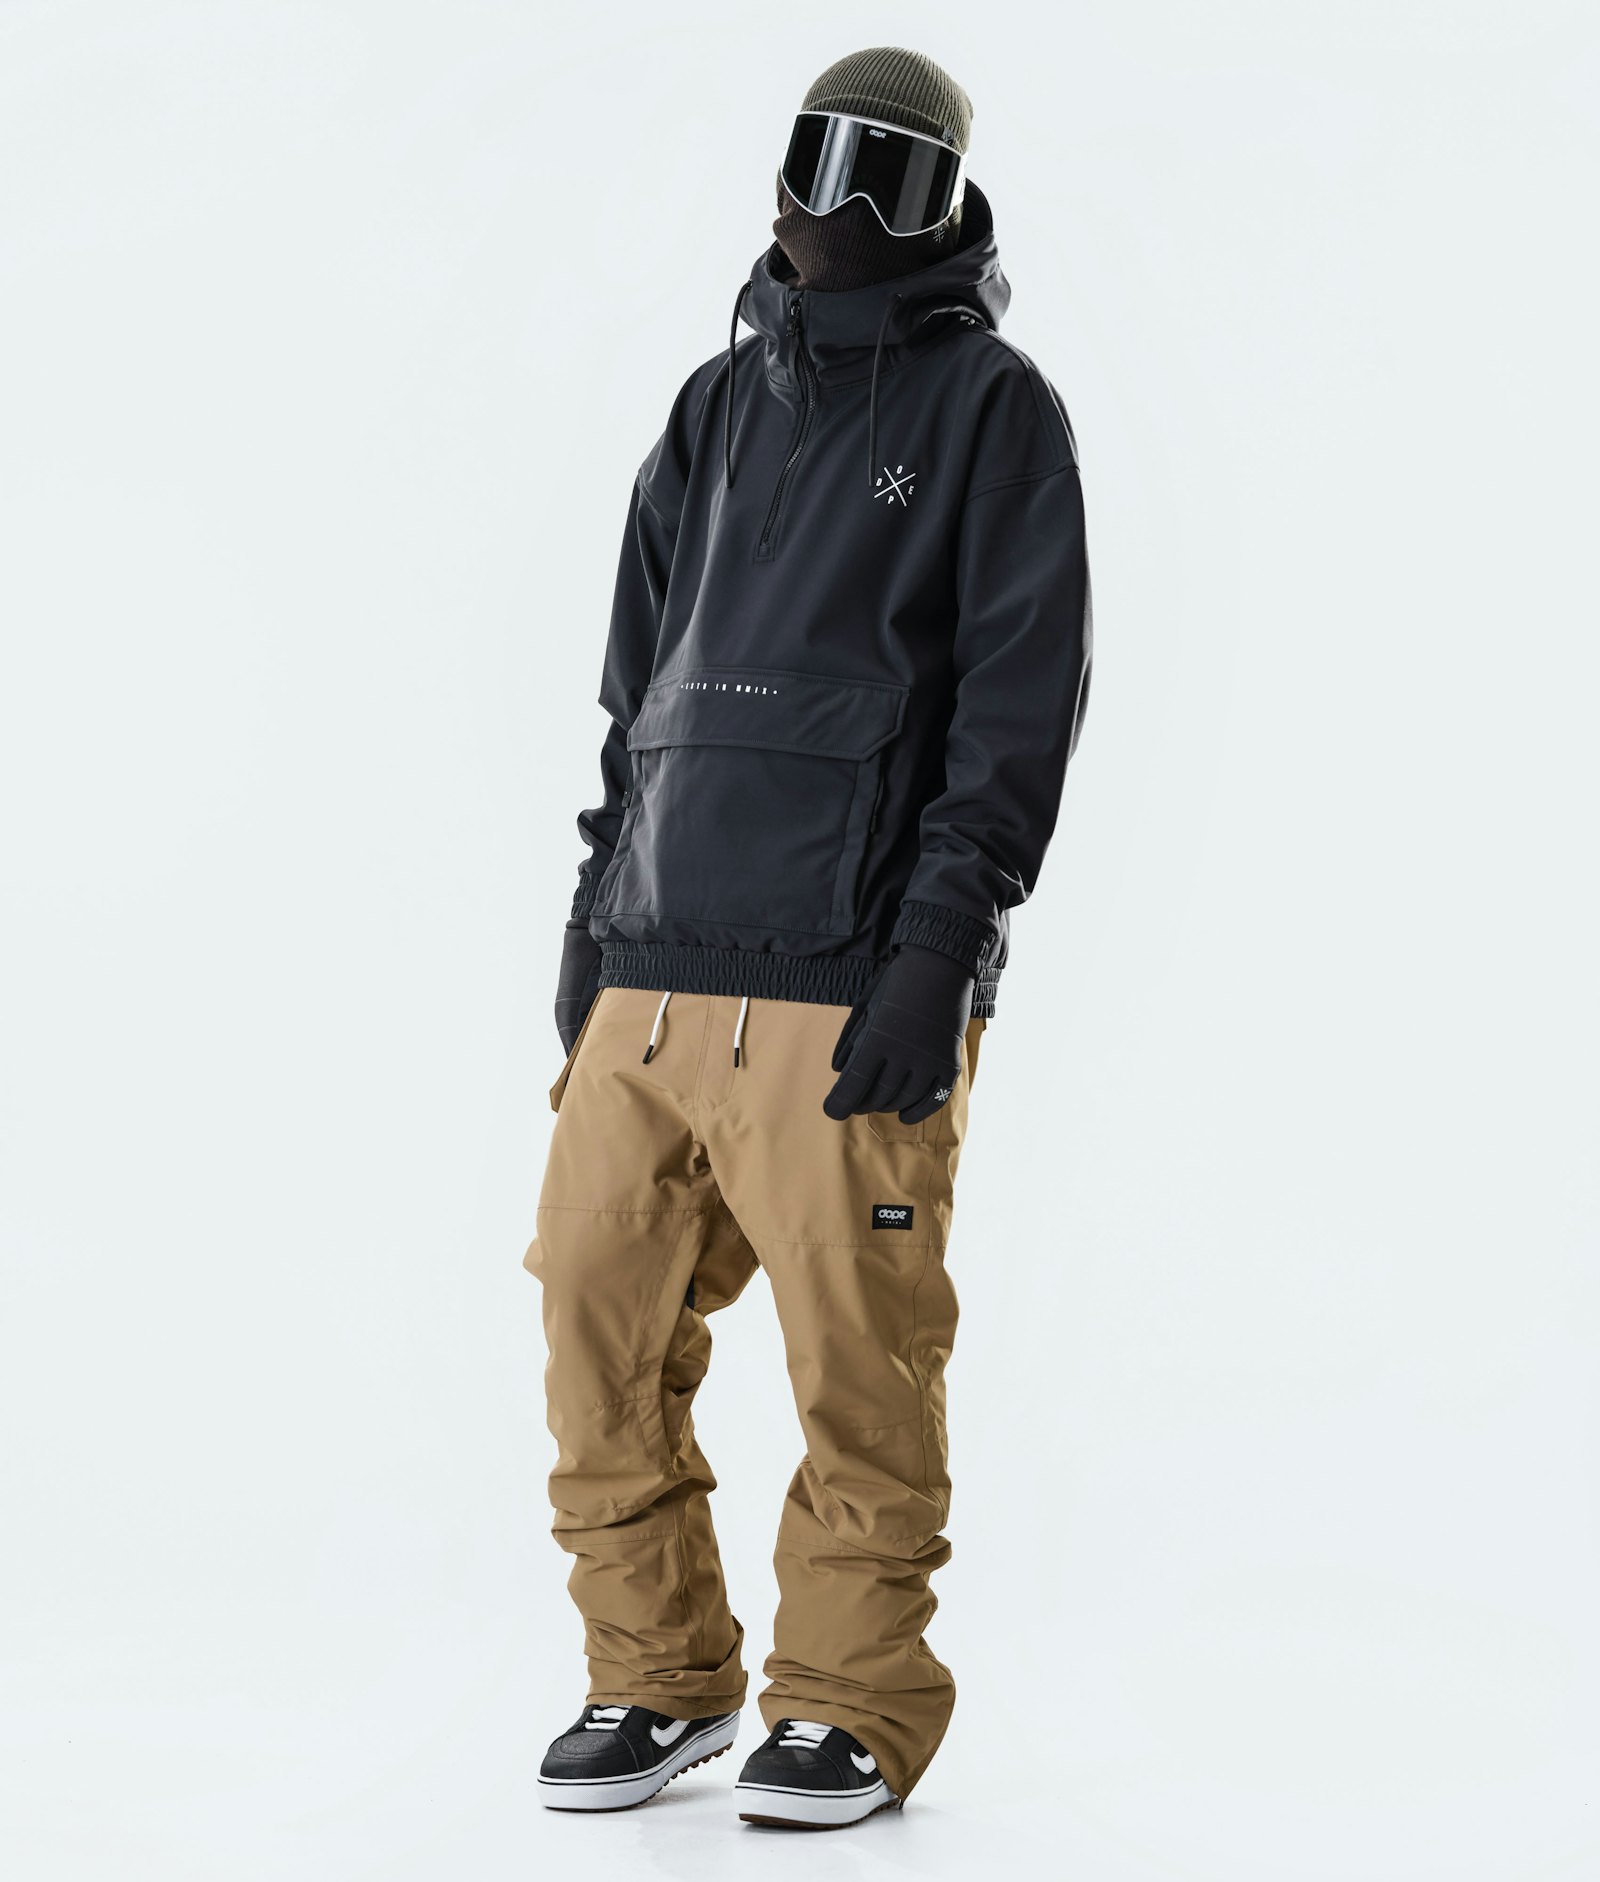 Cyclone 2020 Snowboard Jacket Men Black